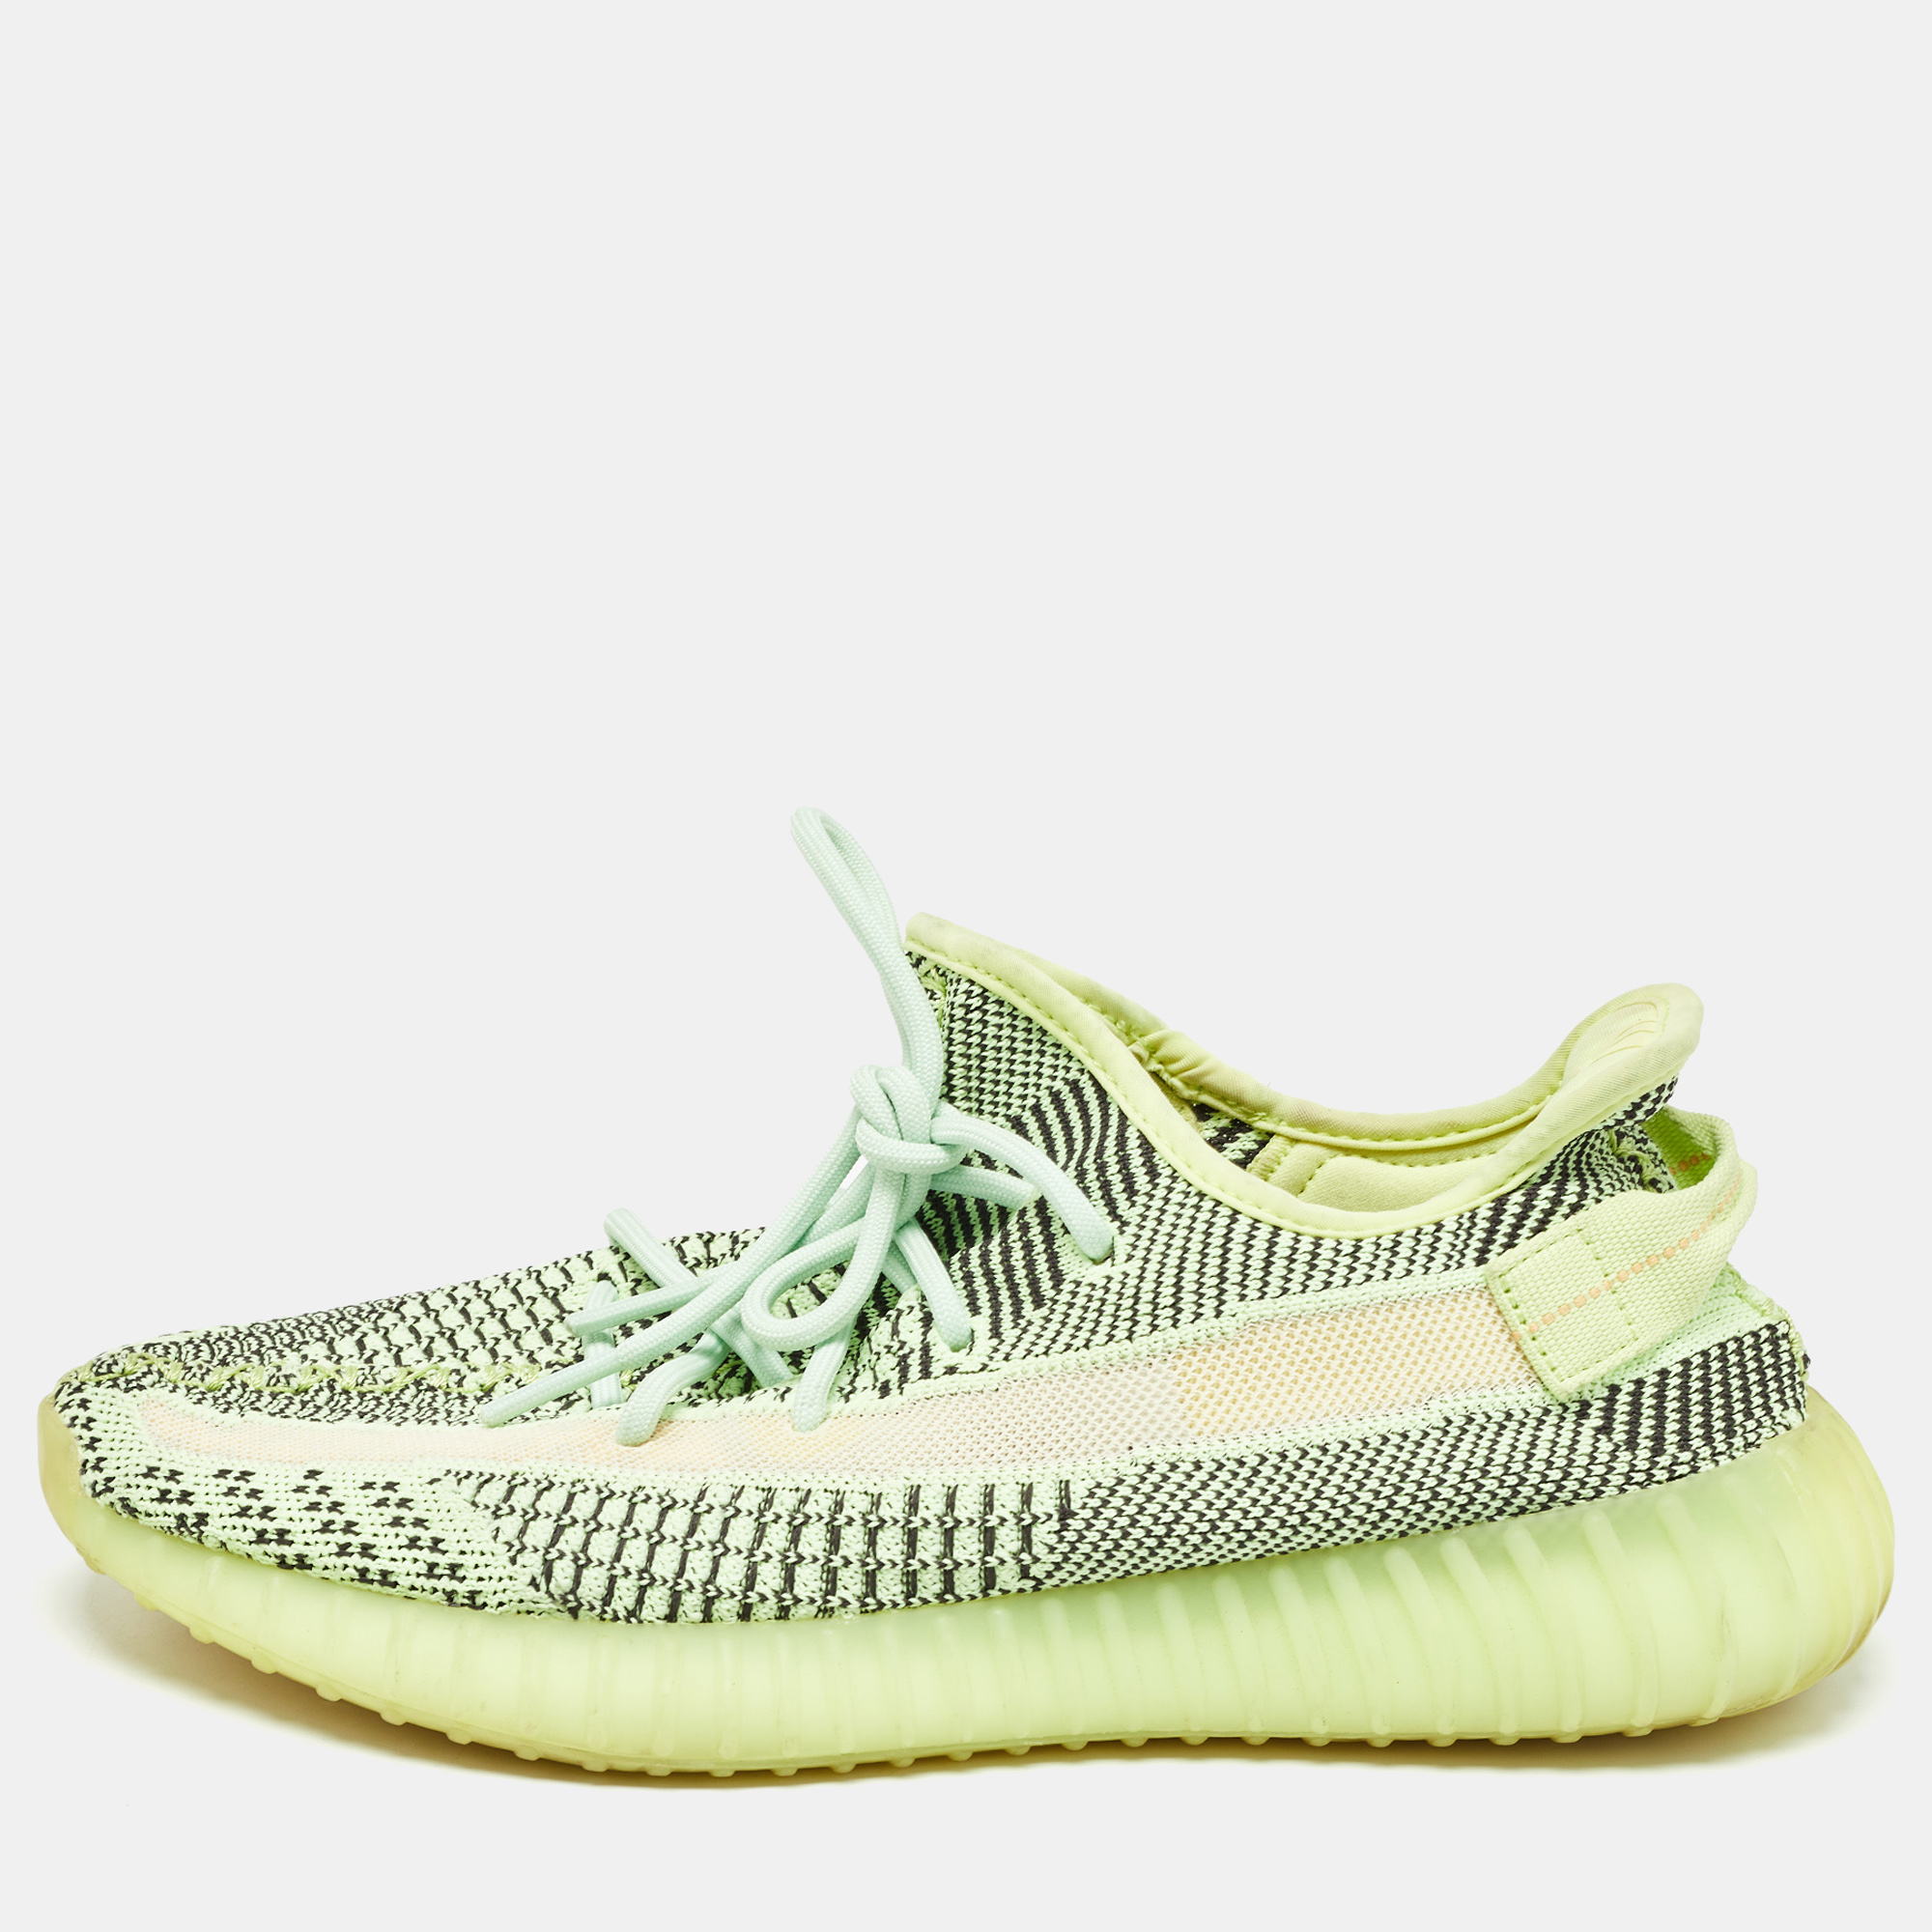 Yeezy x adidas neon yellow knit fabric boost 350 v2 semi frozen yellow sneakers size 43 2/3